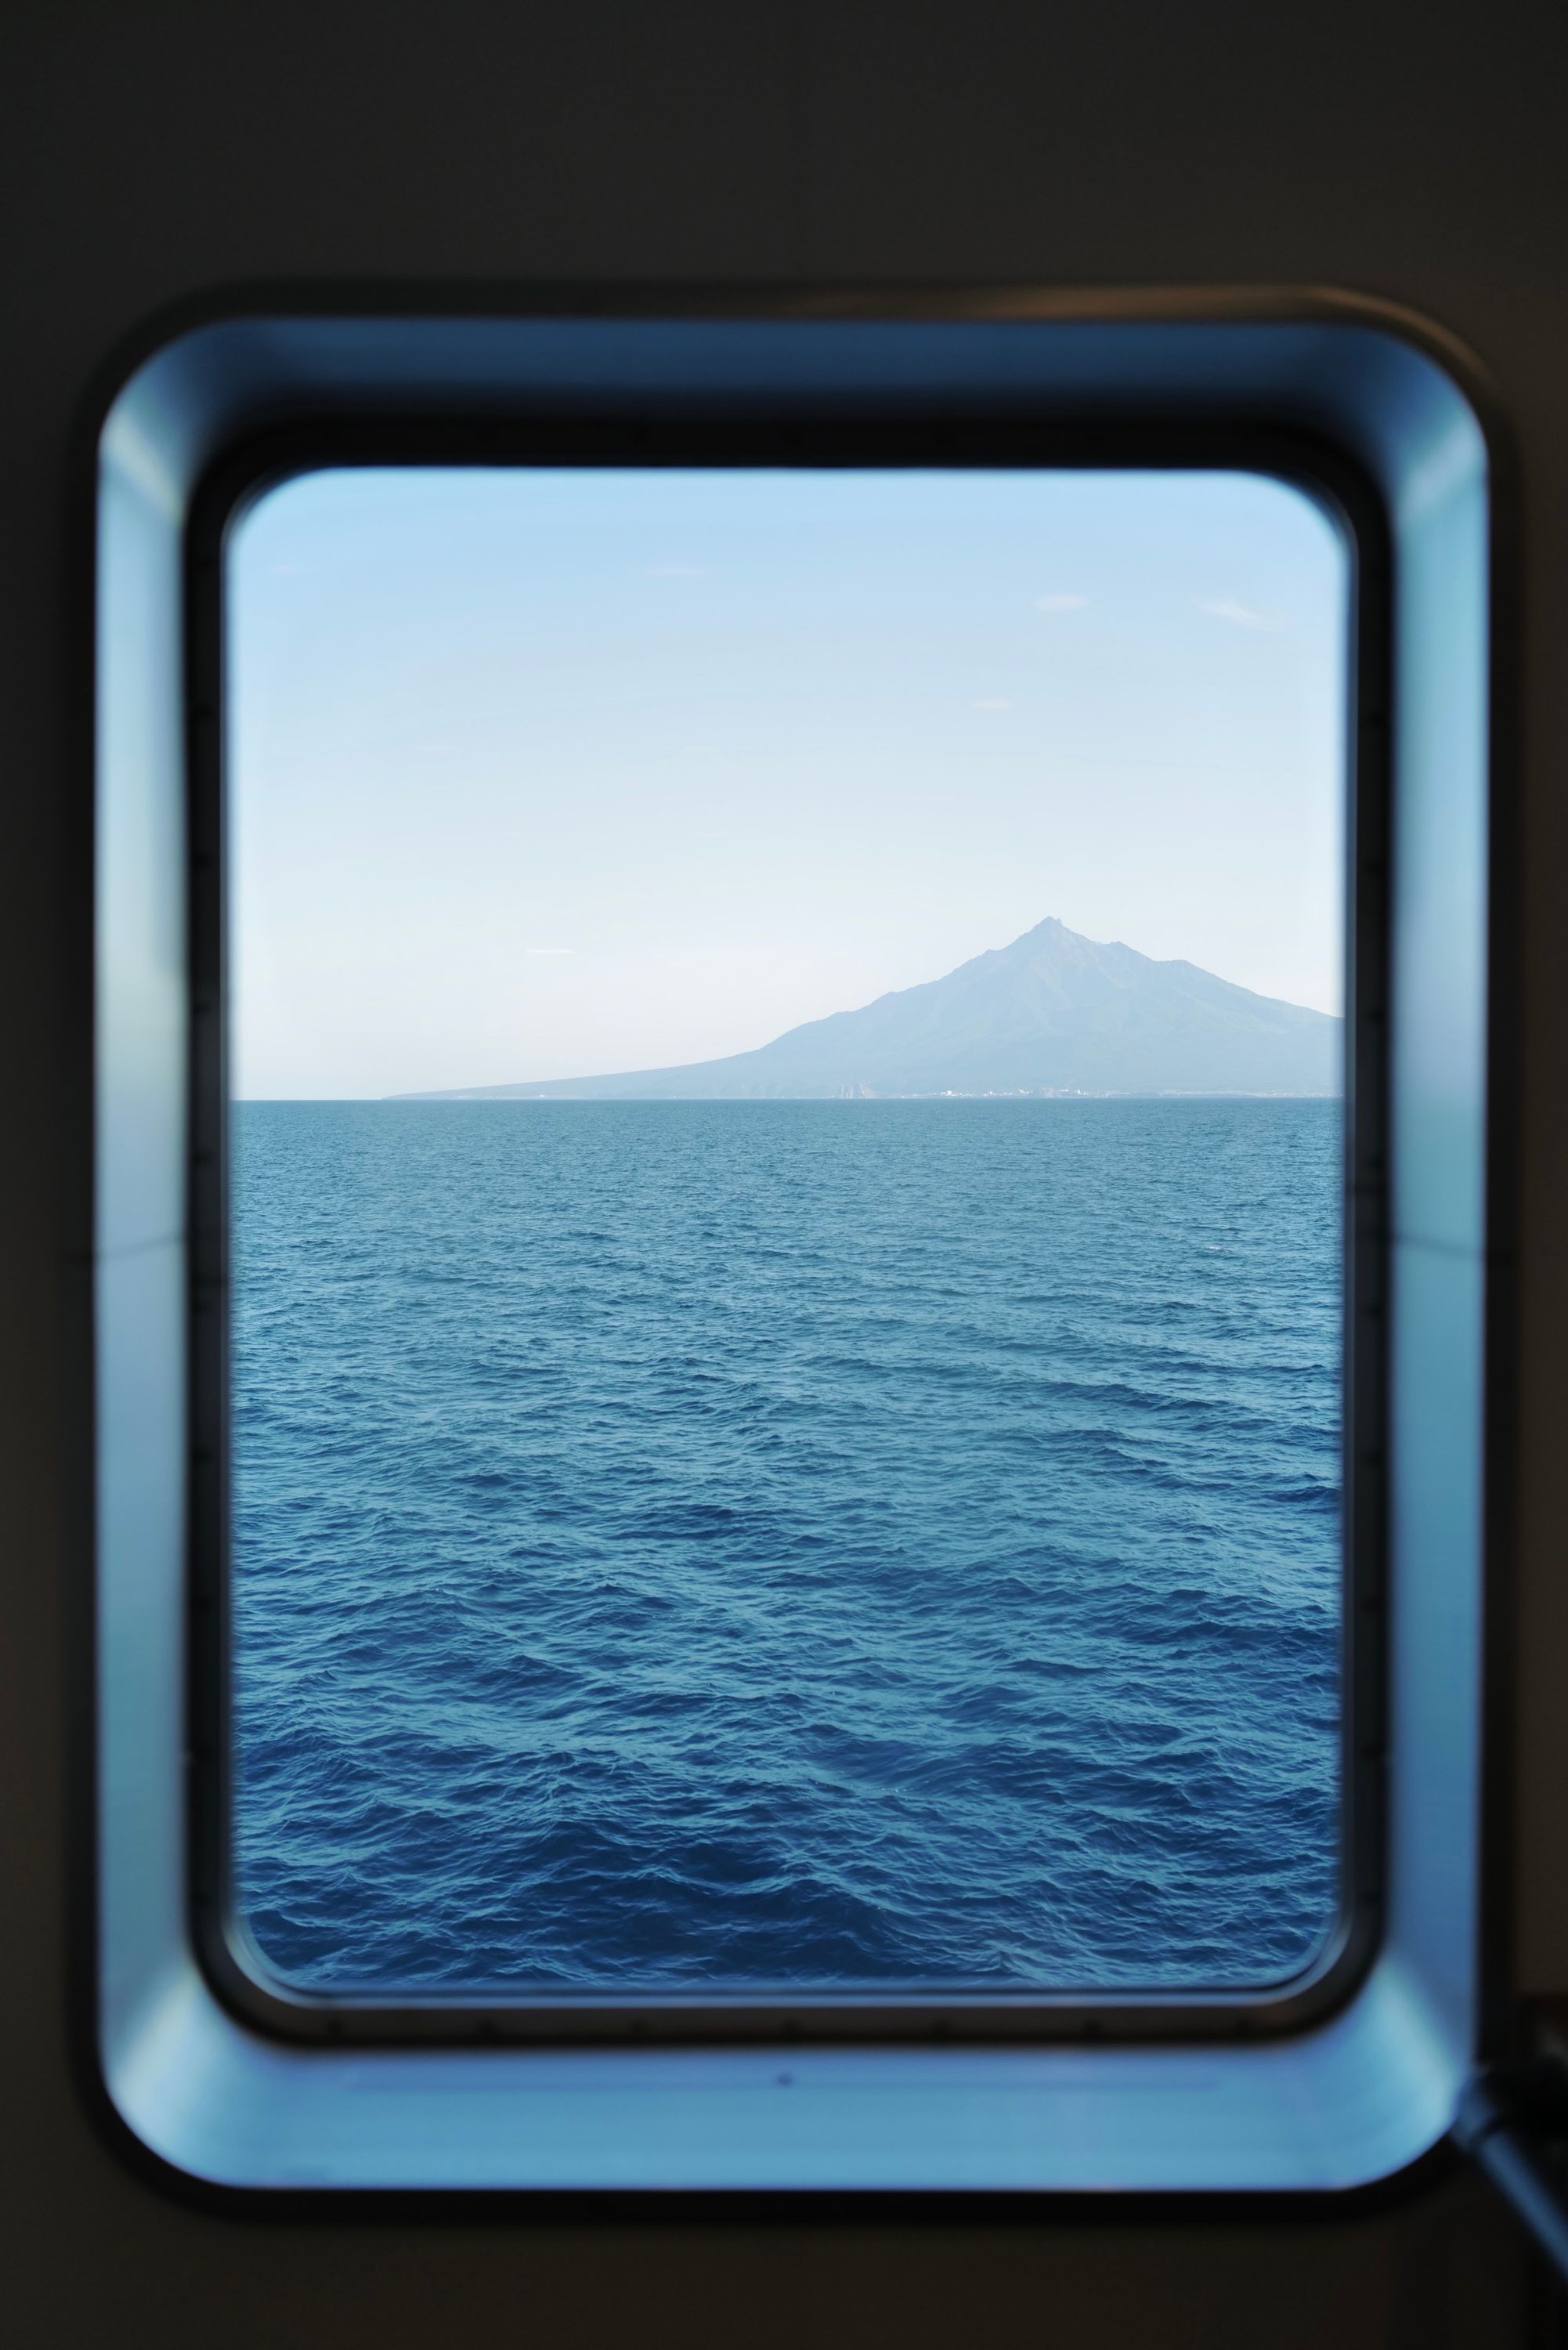 Mount Rishiri seen across the water through the window of a ferry